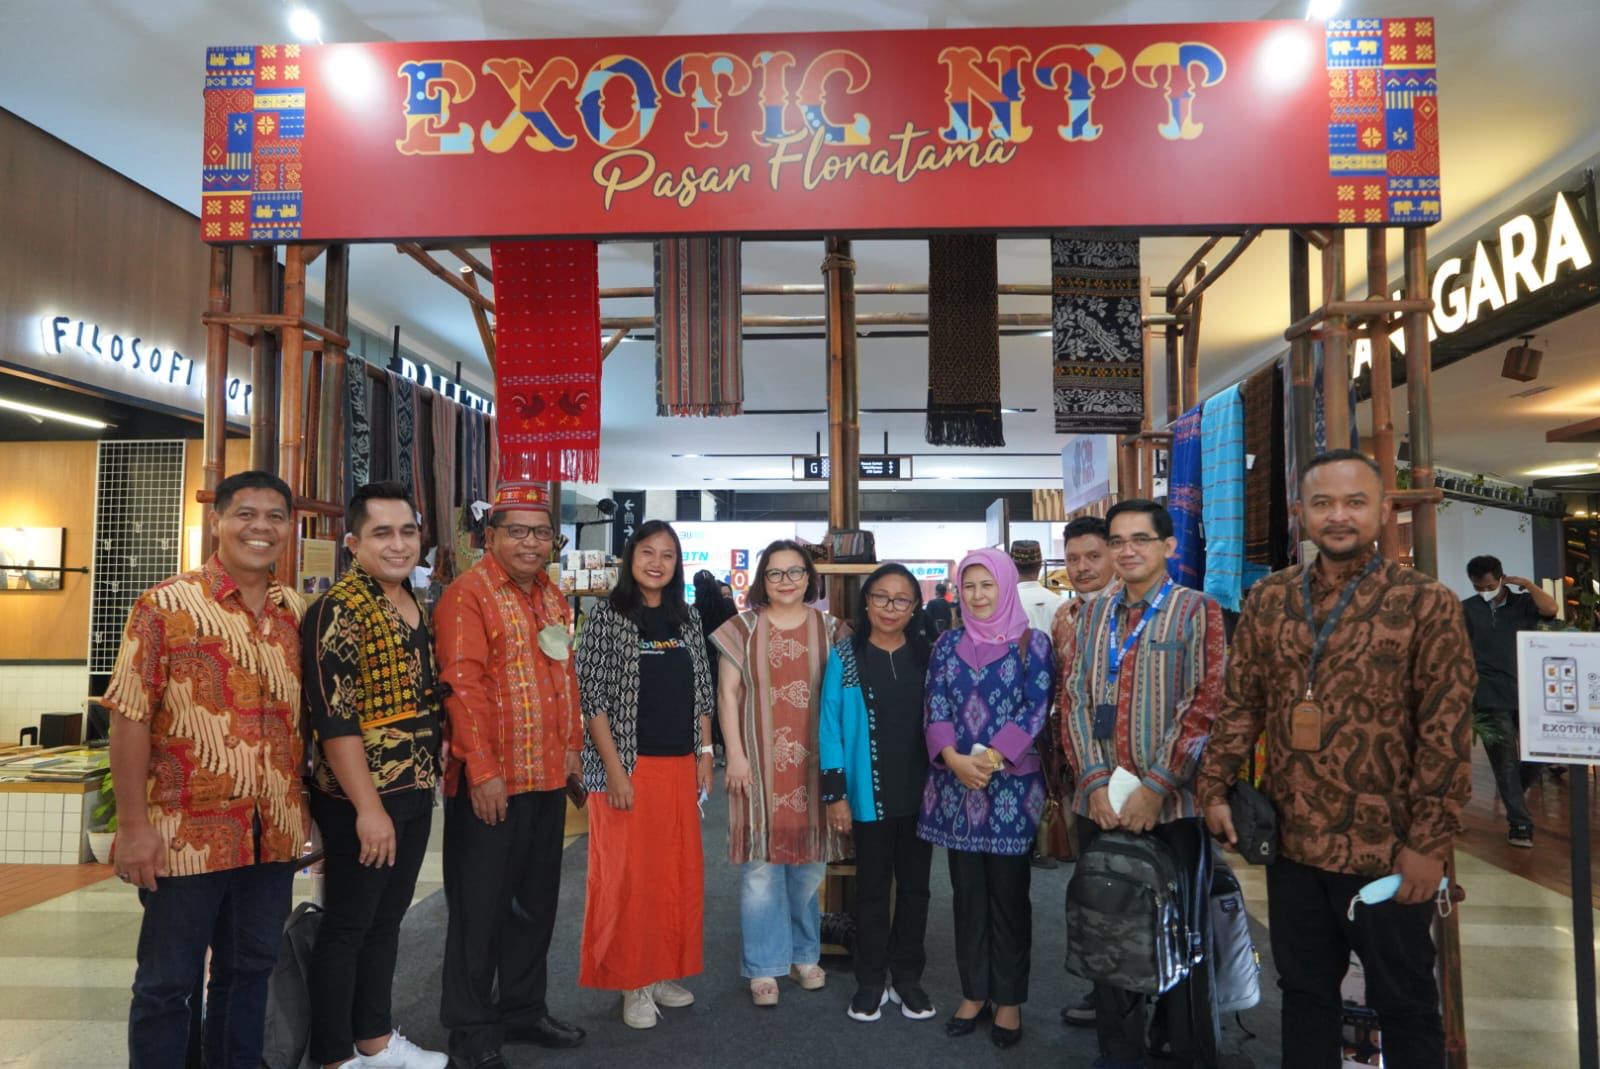 "Pameran Ekraf Exotic NTT Pasar Floratama" Digelar di Gedung Sarinah Jakarta